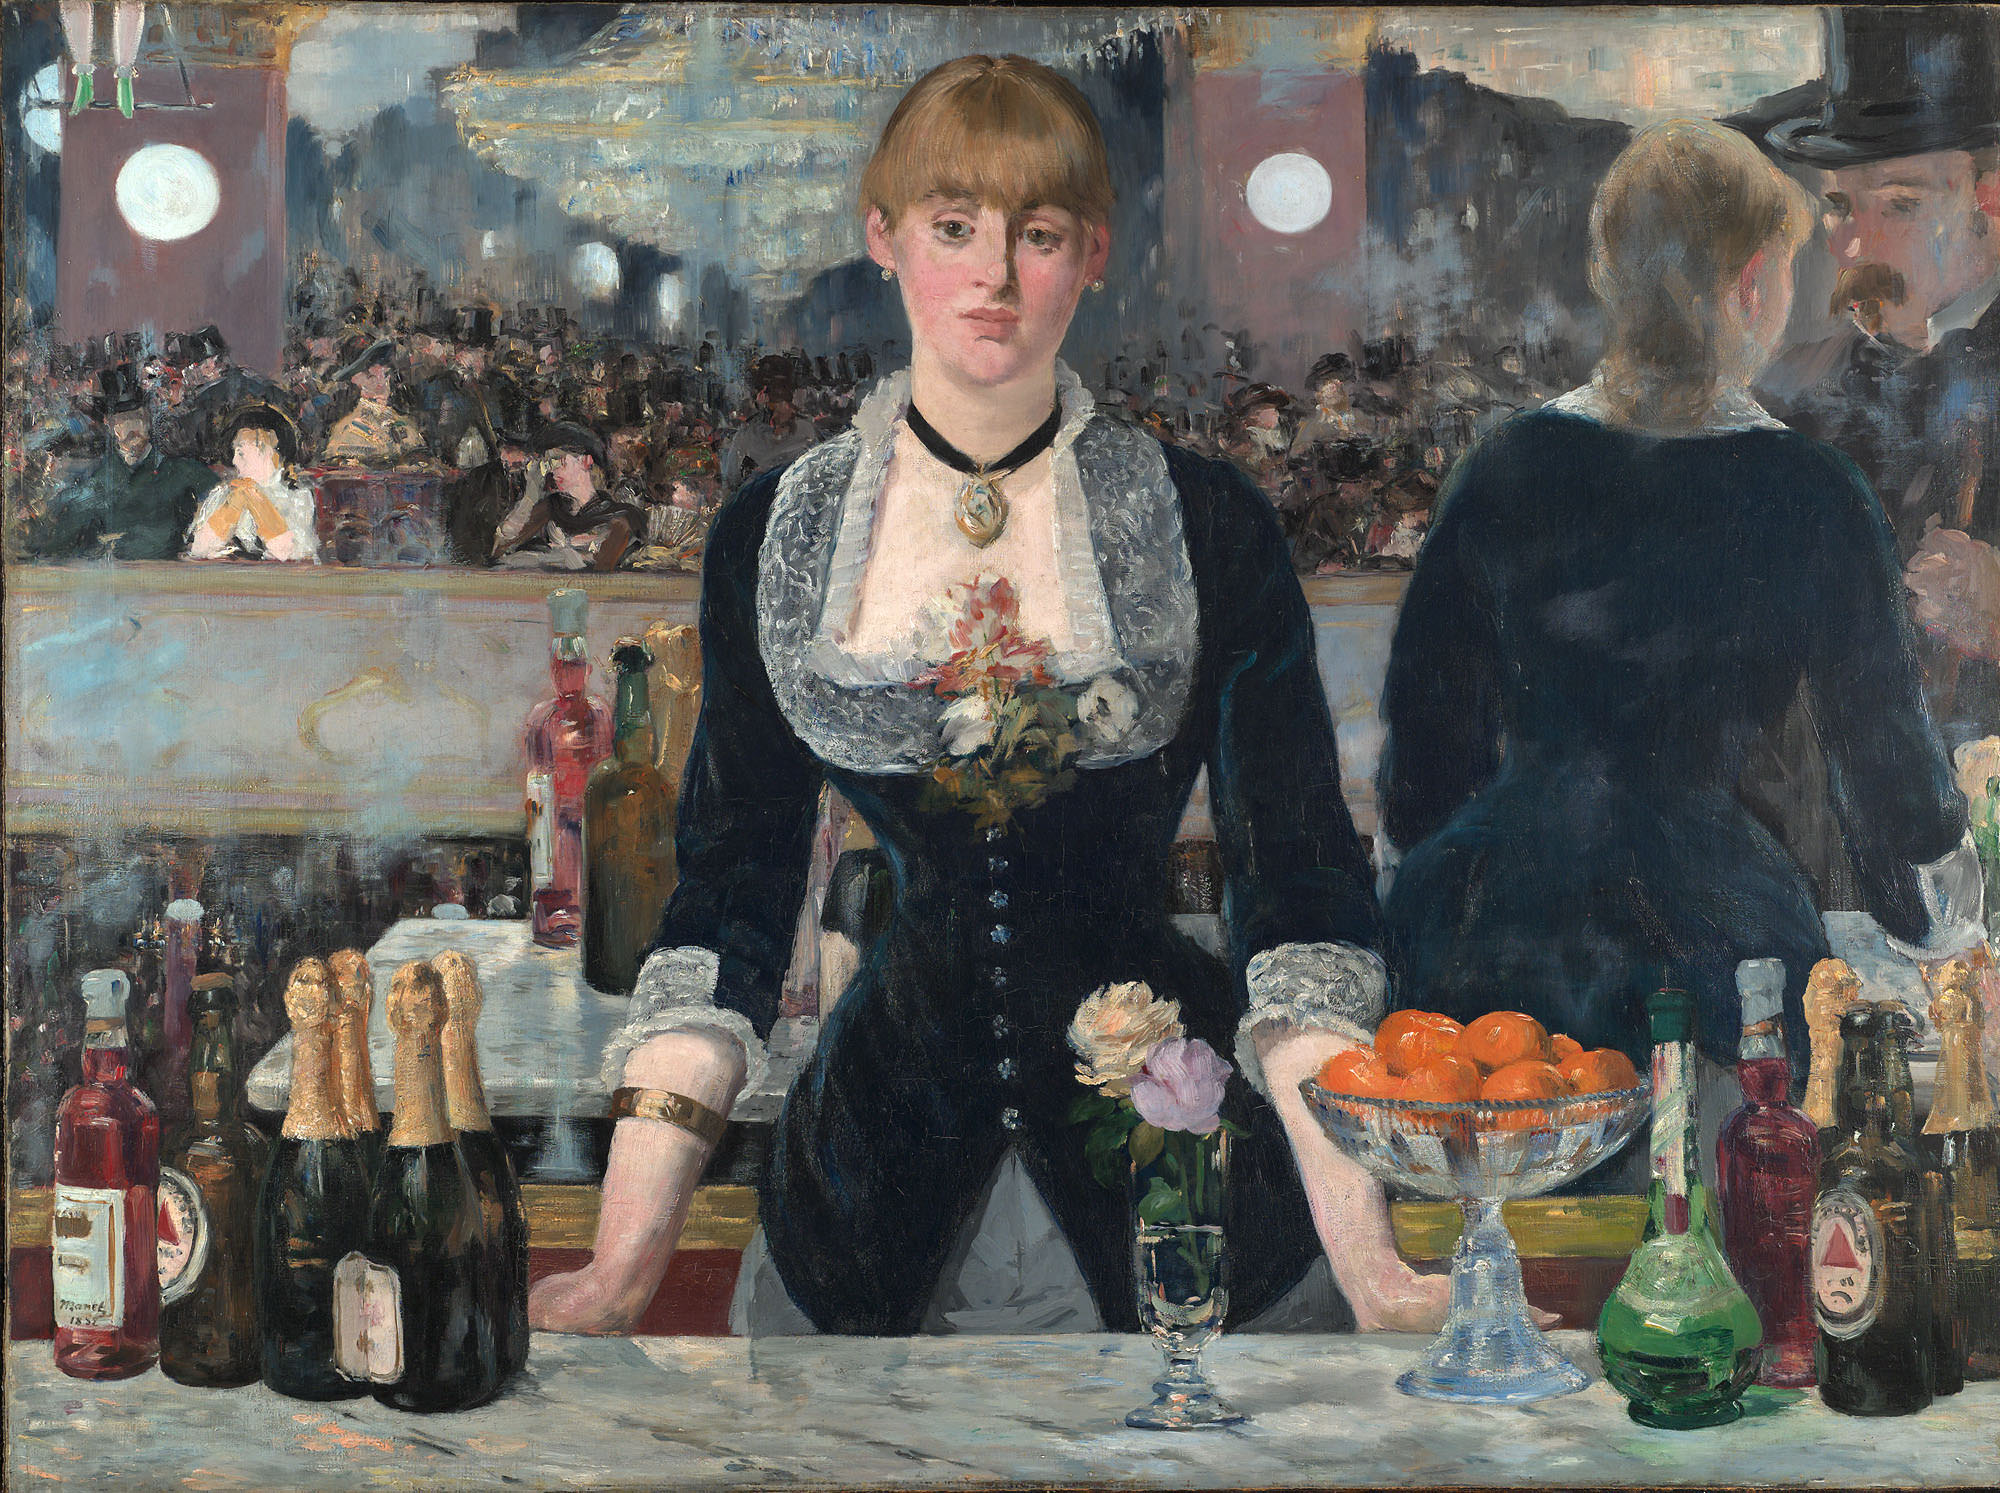 A Bar at Folies-Bergere by Edouard Manet